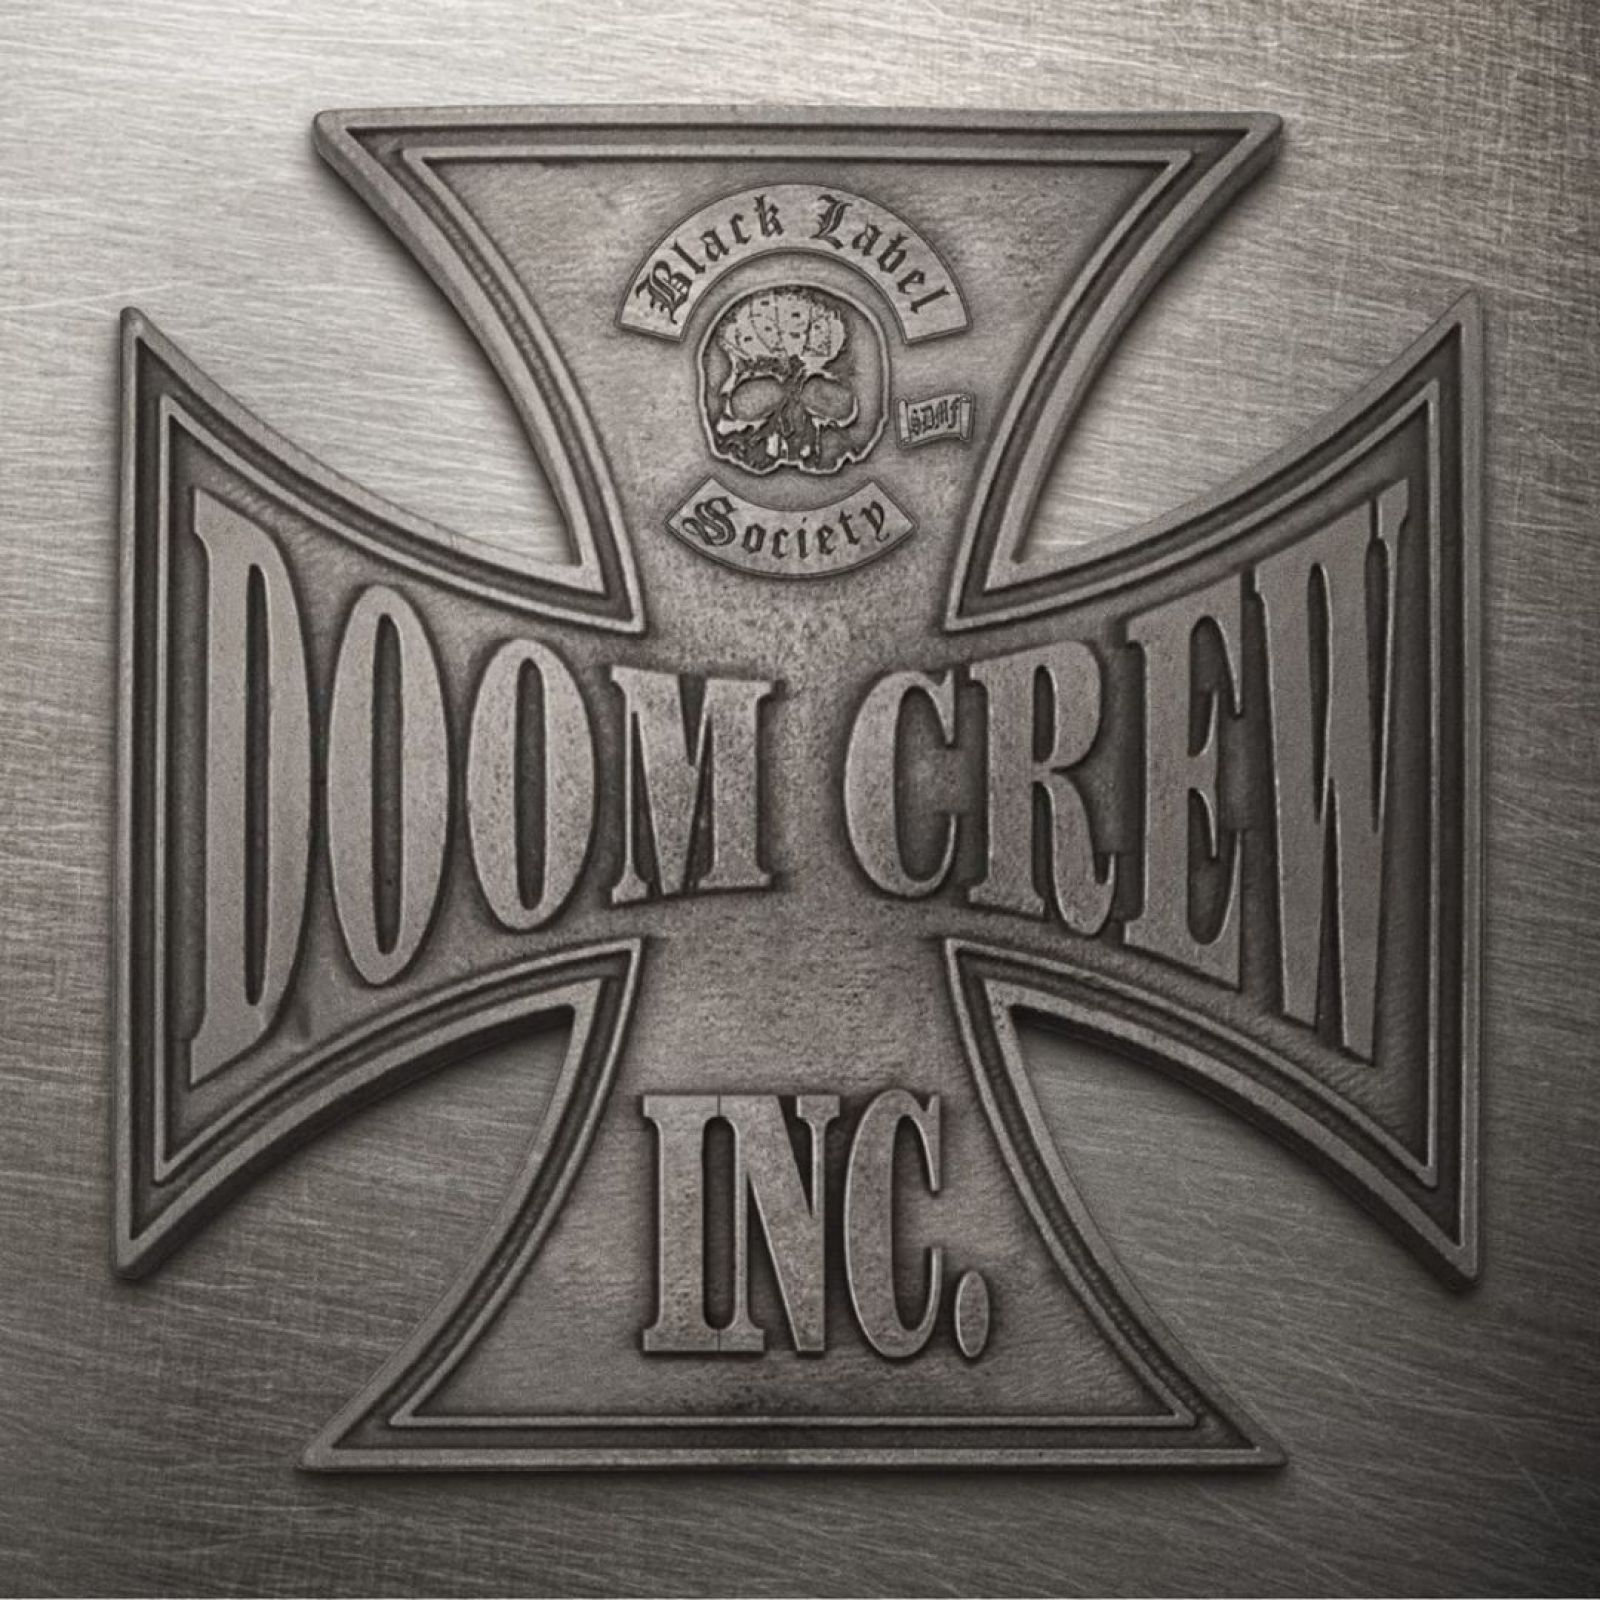 Society 2021. Black Label Society Doom Crew. Black Label Society Doom Crew Inc.. Black Label Society 2021. Black Label Society 2021 задняя обложка CD Doom Crew Inc.